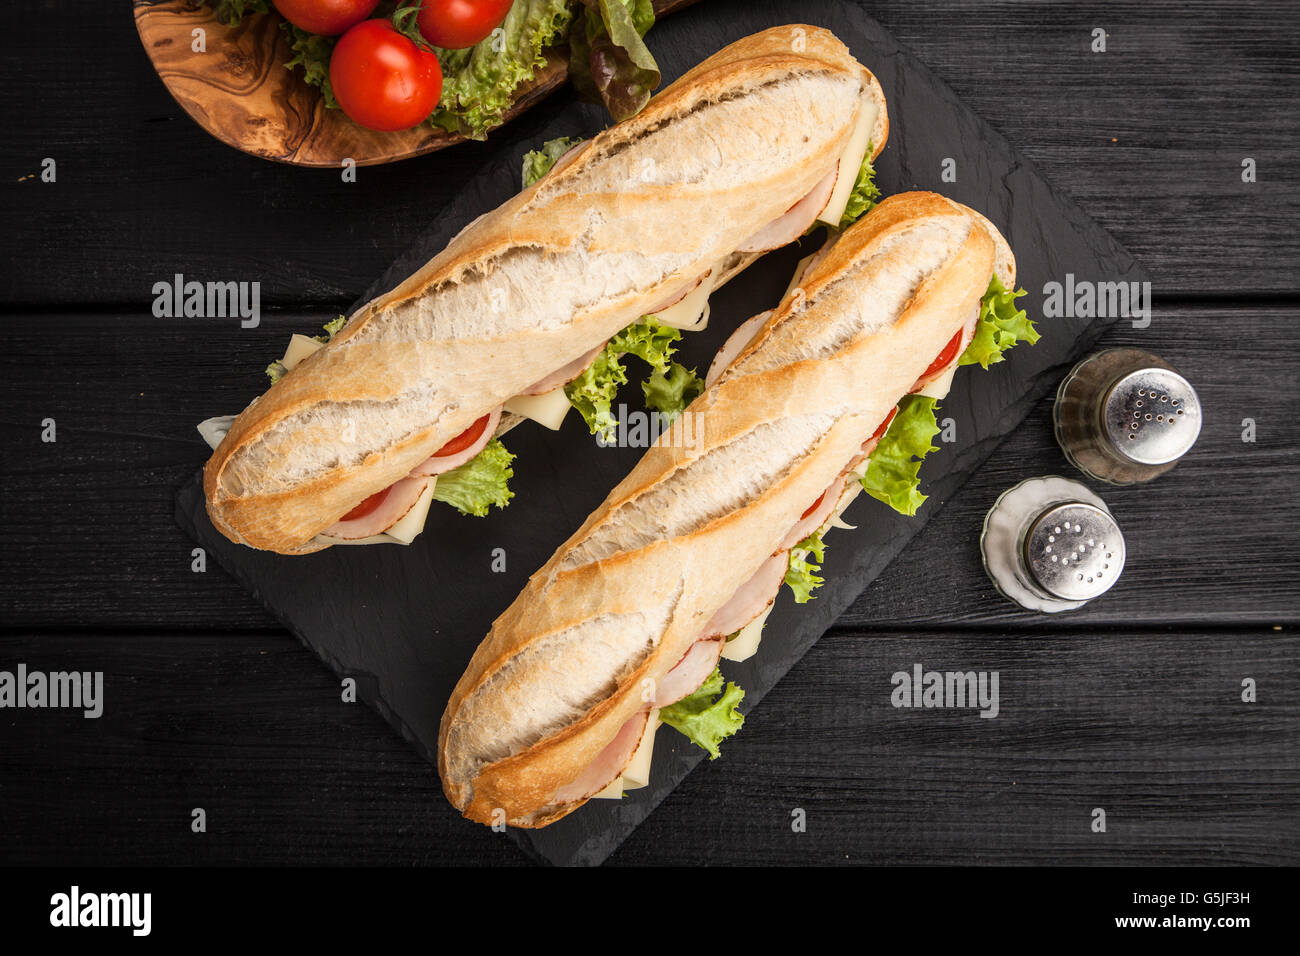 Panini grilled sandwich Stock Photo